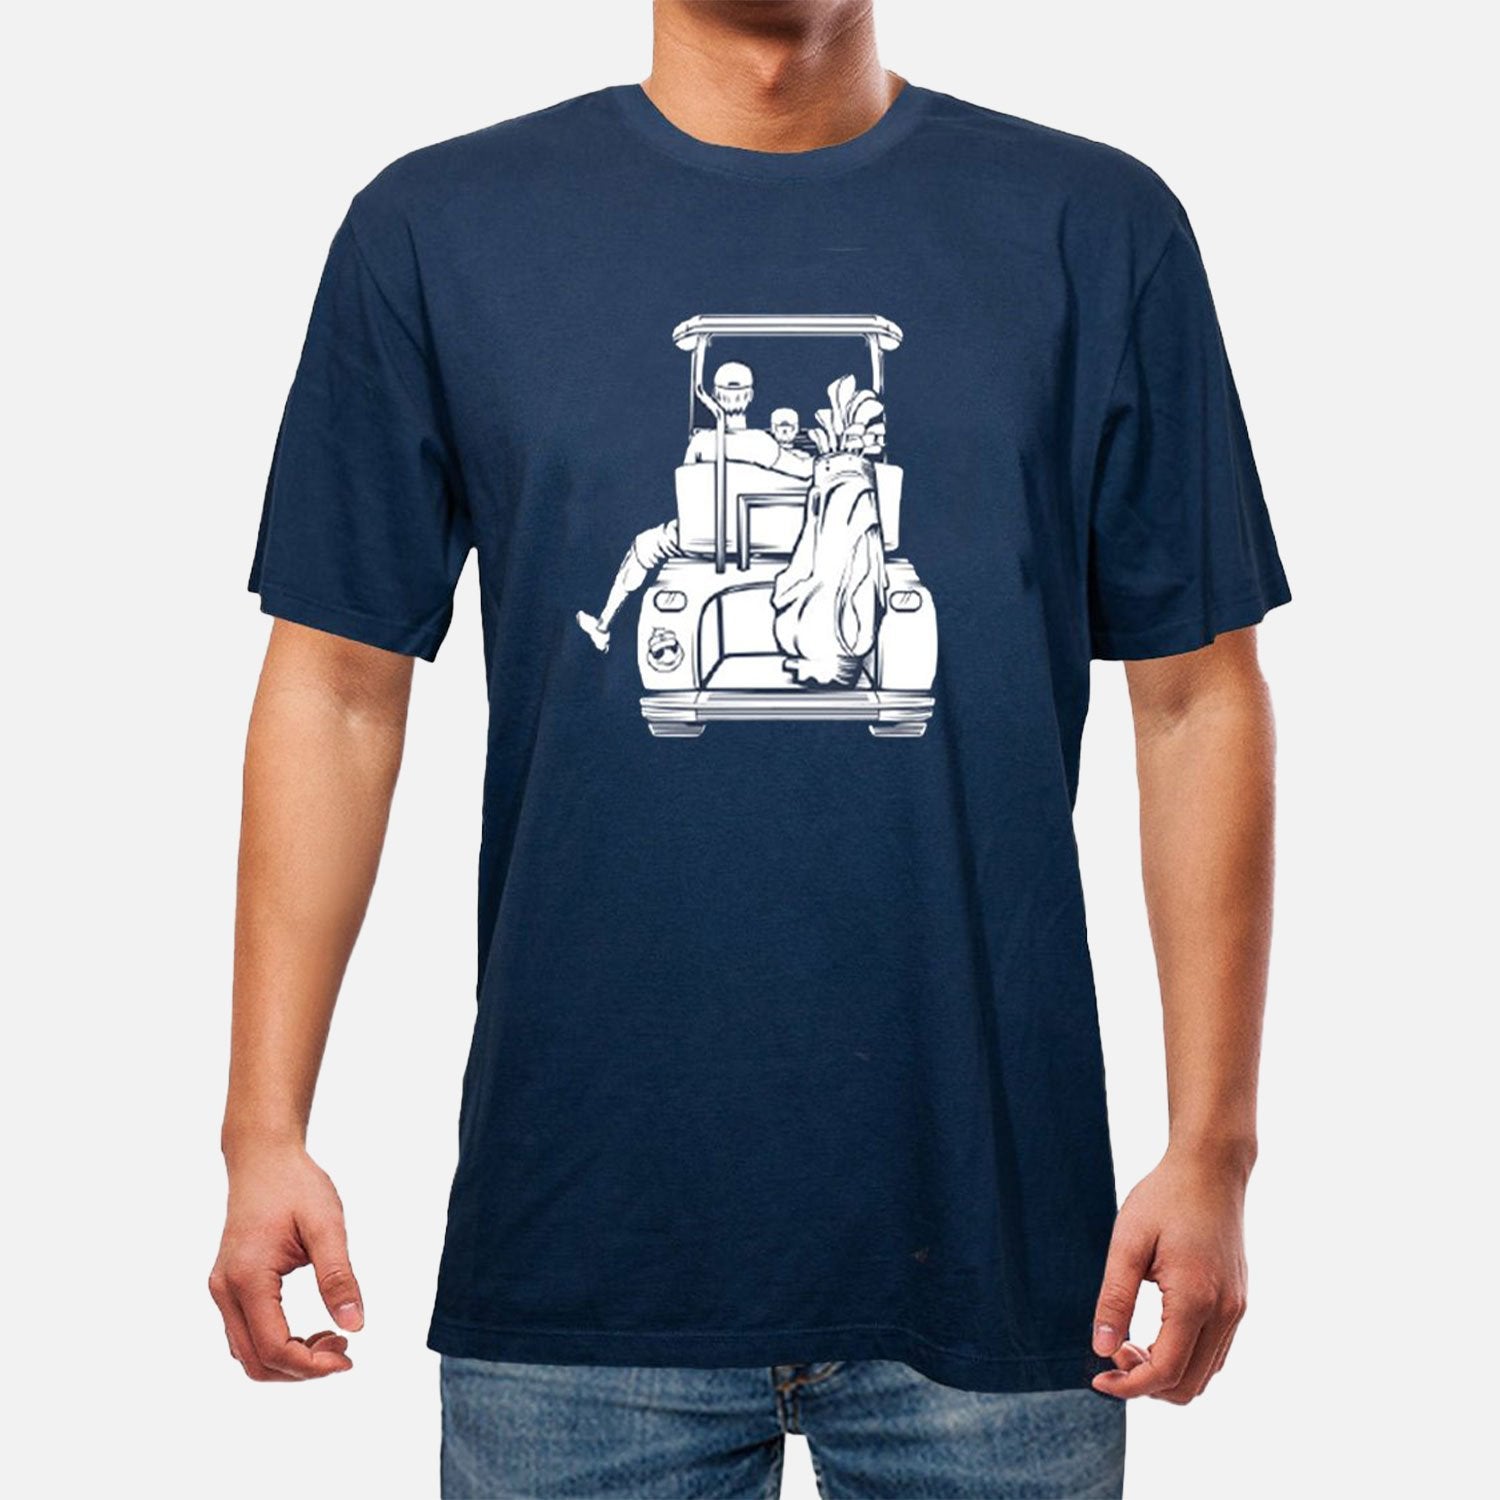 Dad & Son Golf Cart Shirt - F. King Golf